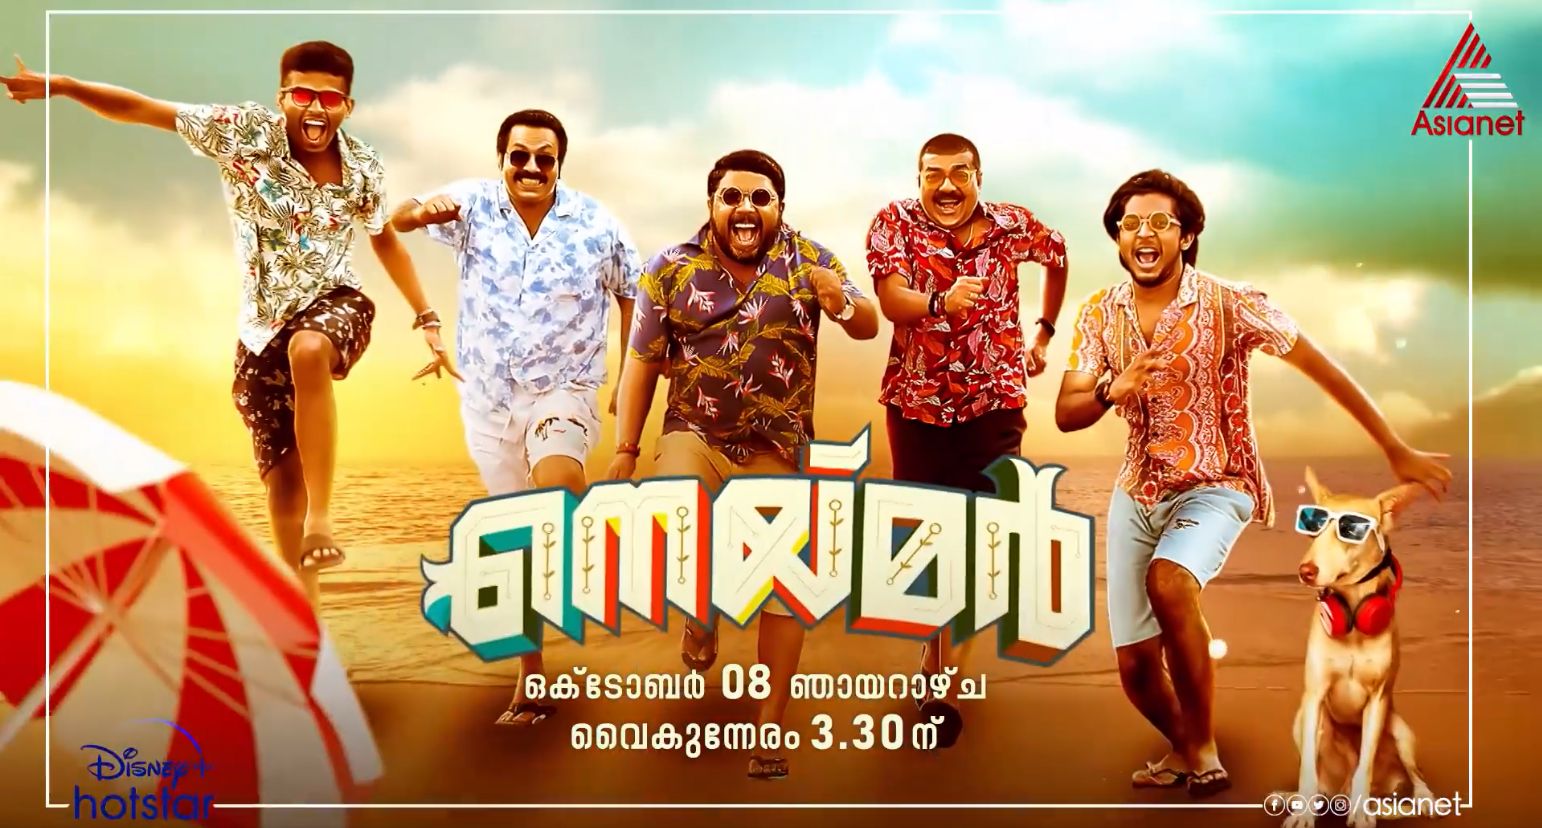 Bhaiyya Bhaiyya Review - Latest Malayalam Comedy Thriller Movie 2